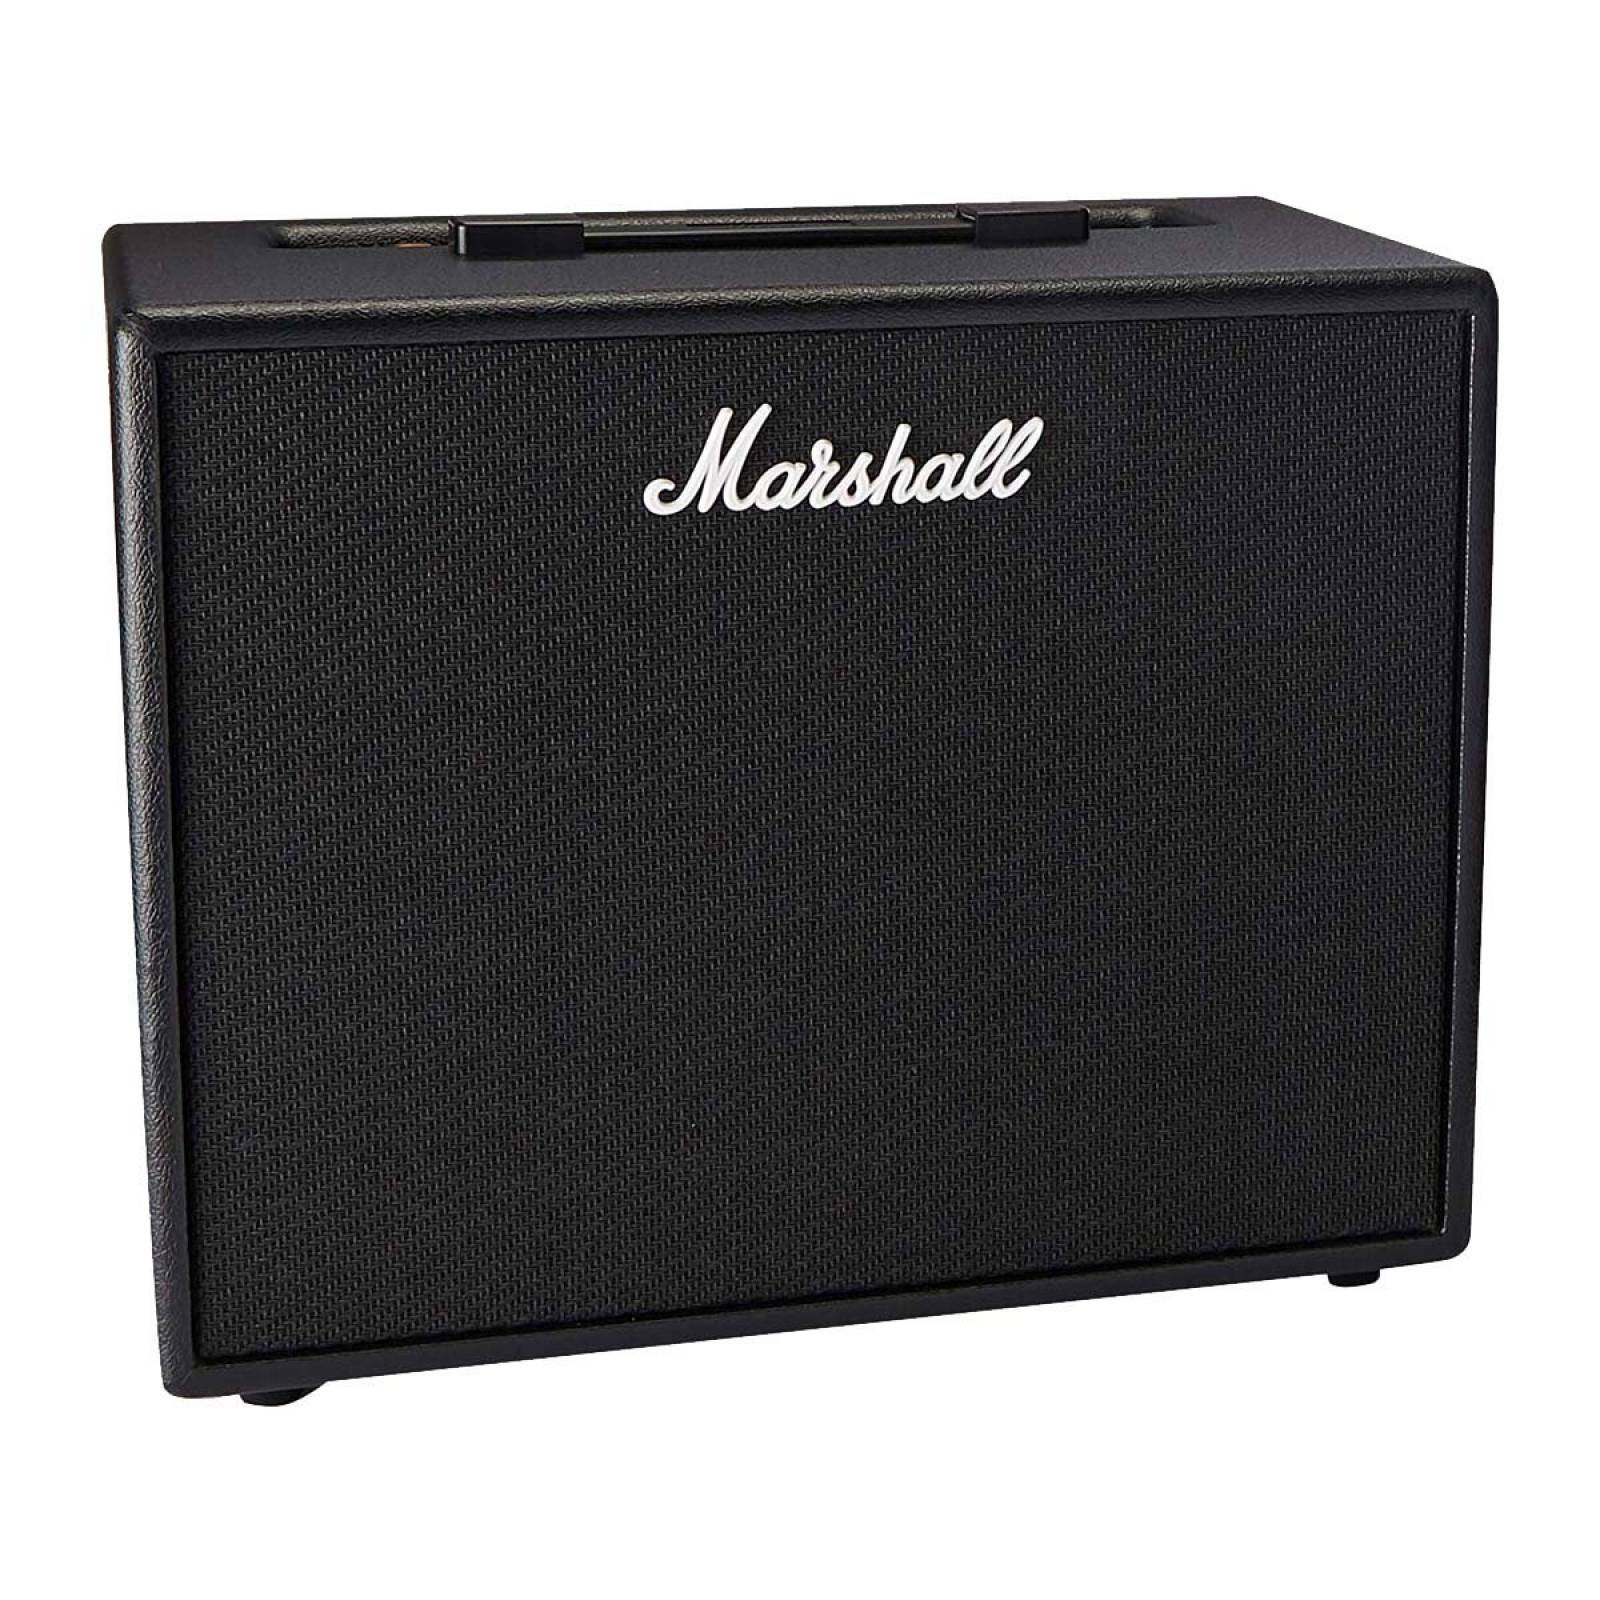 Amplificador de guitarra   CODE50  50 Watts  Marshall